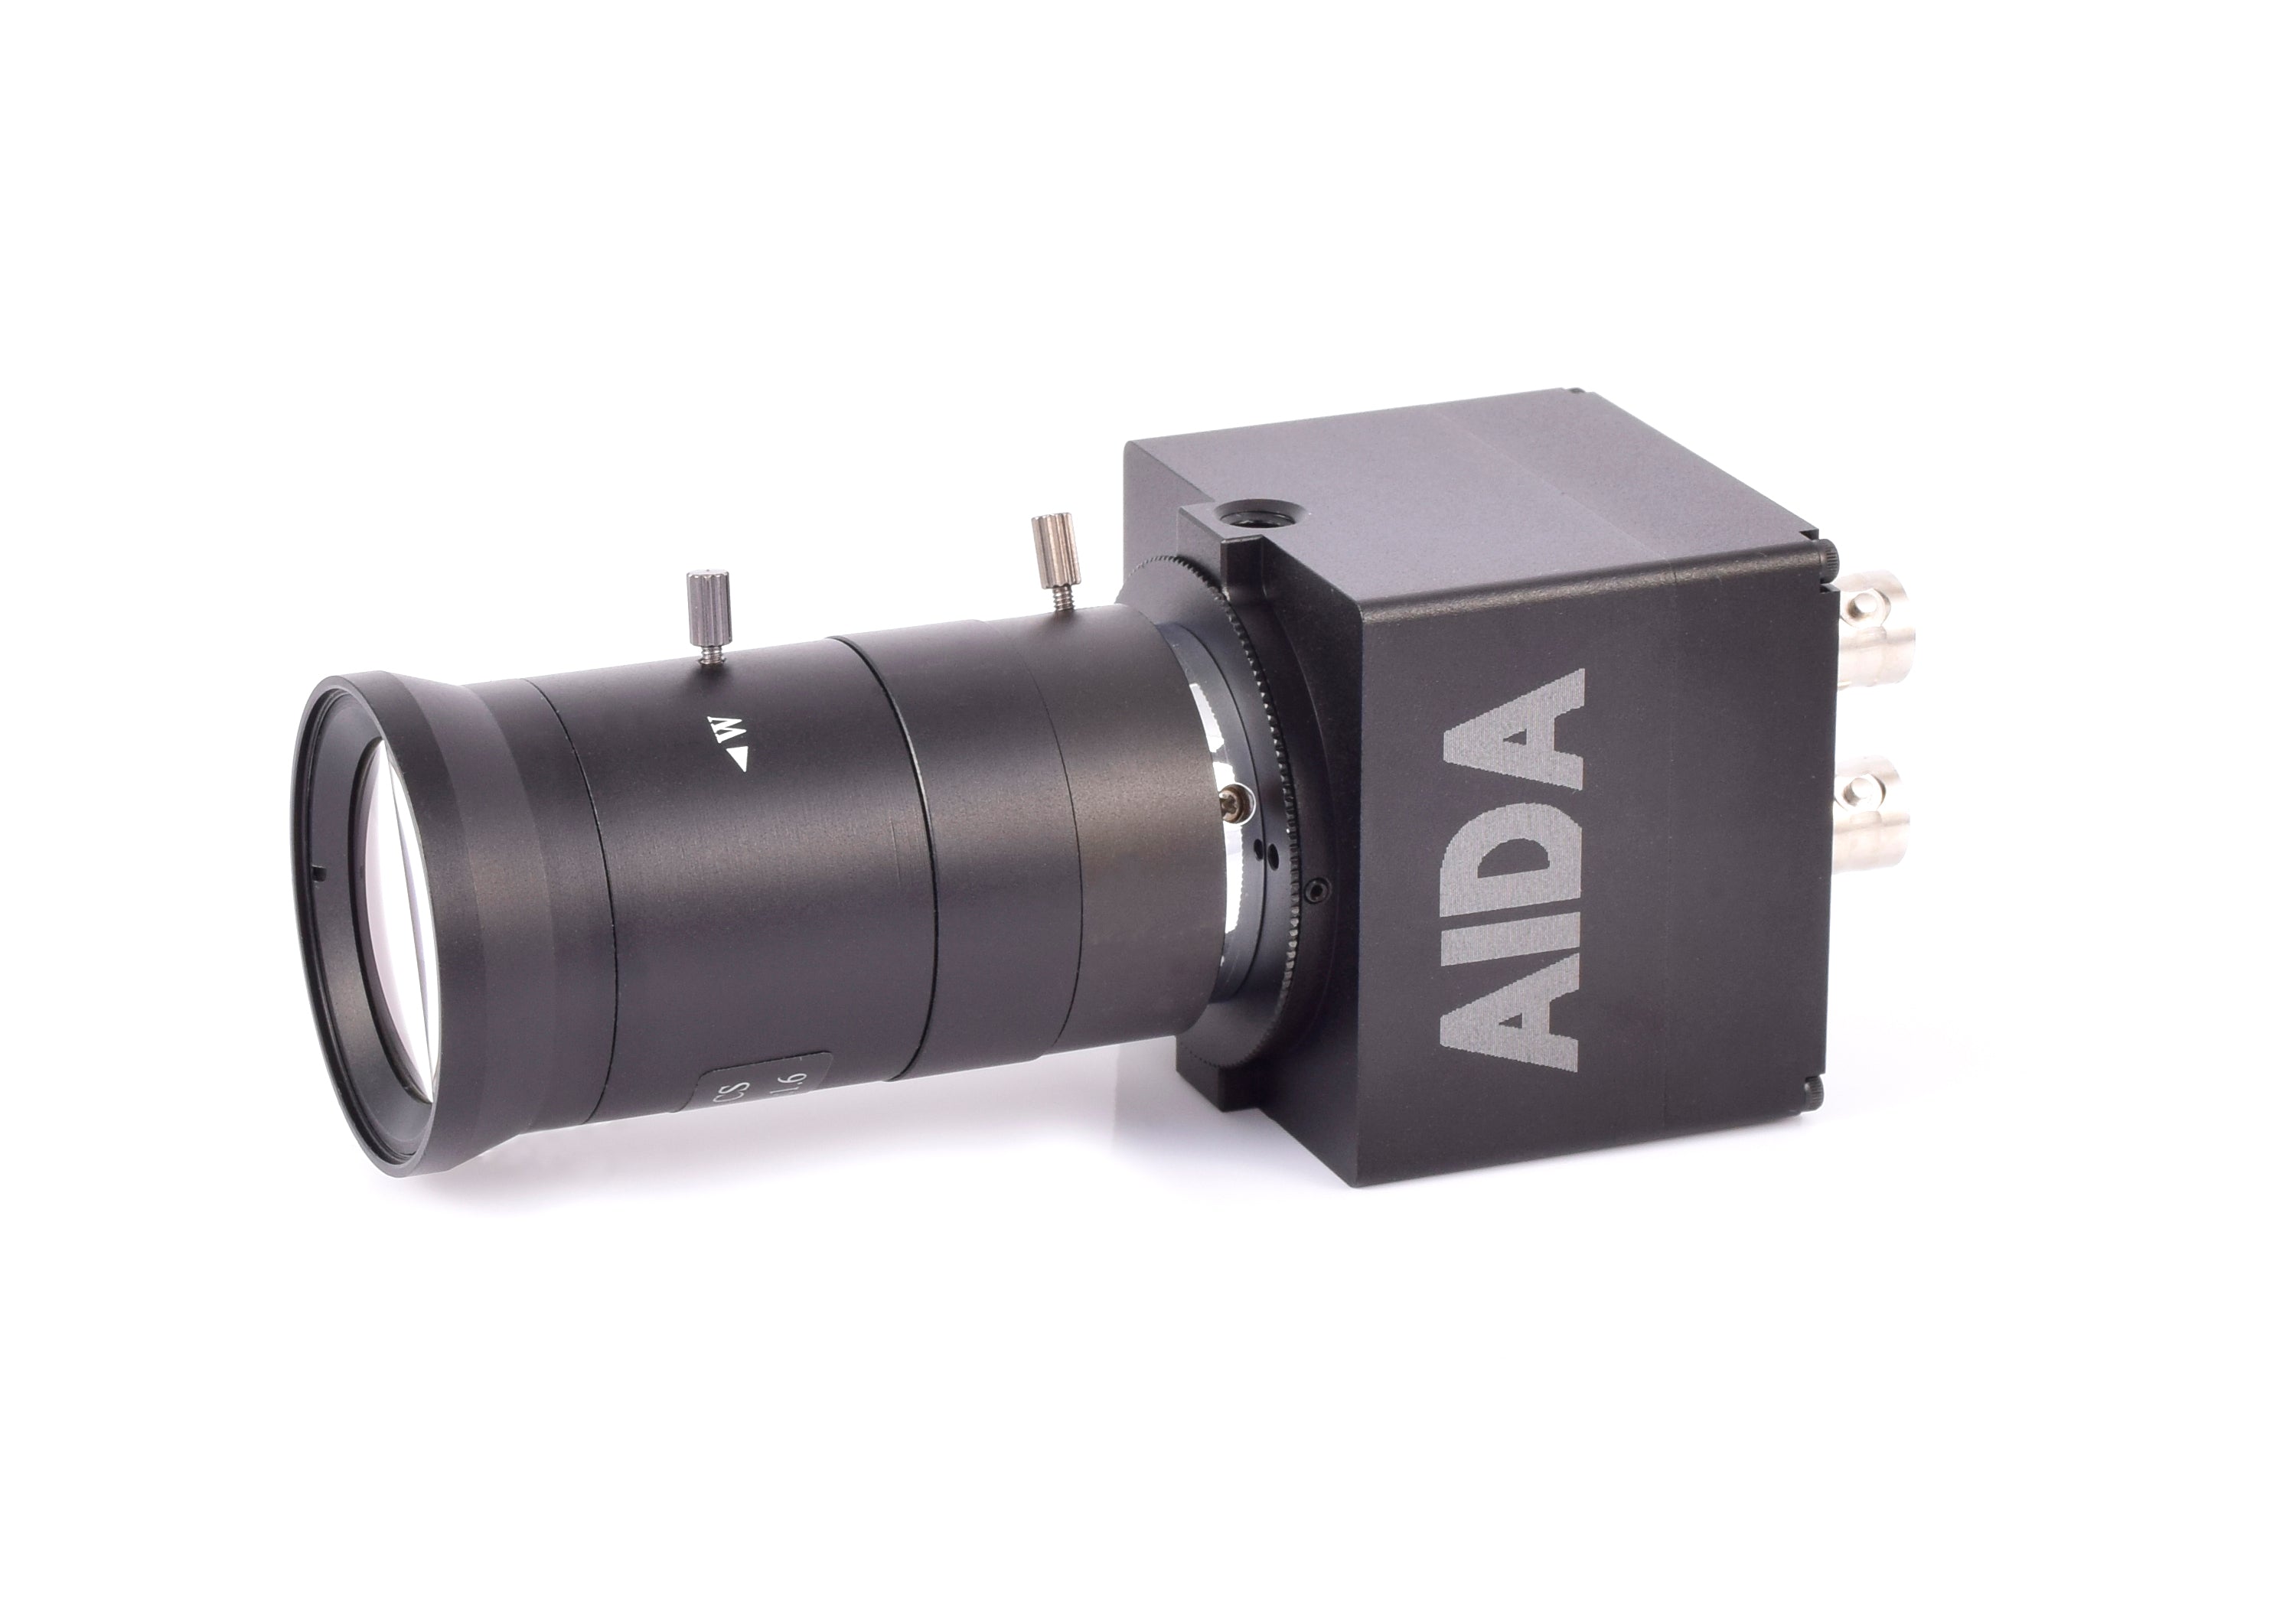 AIDA Imaging 3G-SDI/HDMI Full HD Genlock Camera with Attached Lens